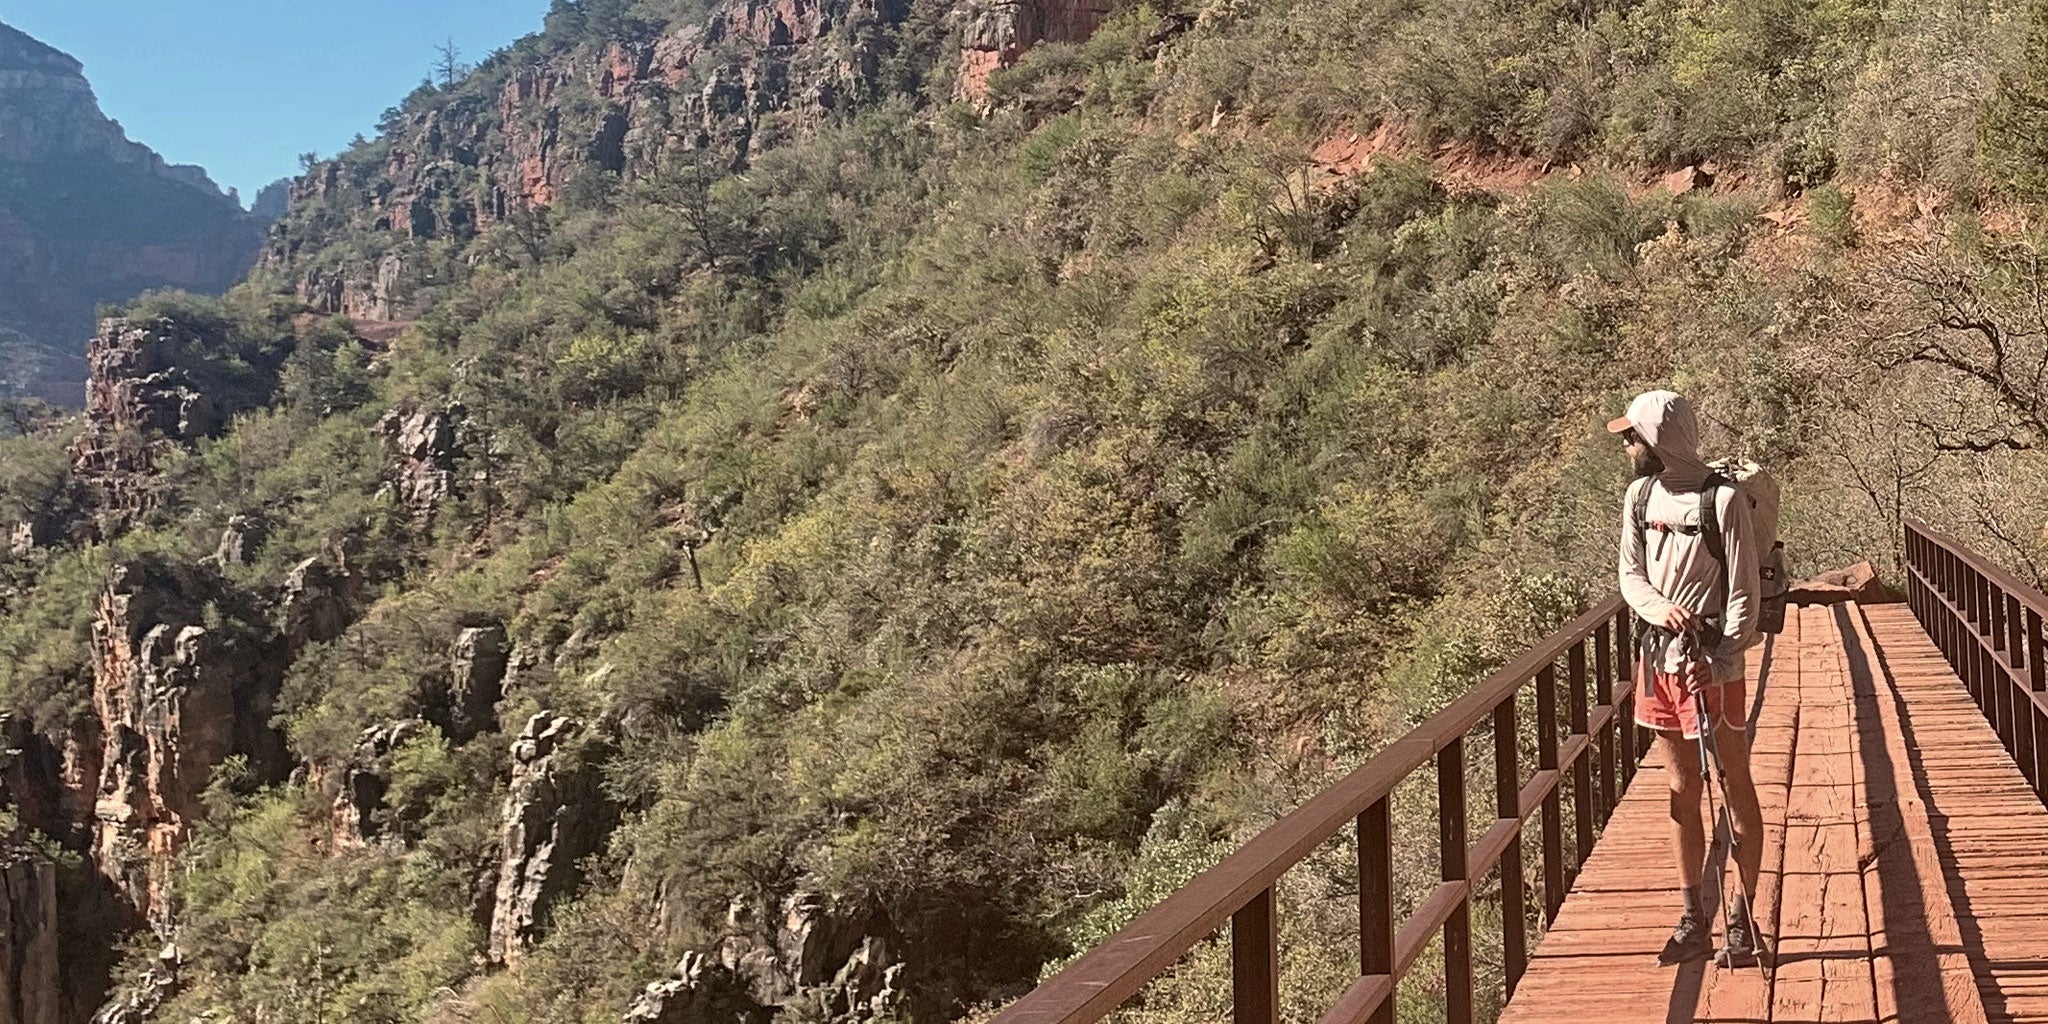 Getting The Bird On The Arizona Trail